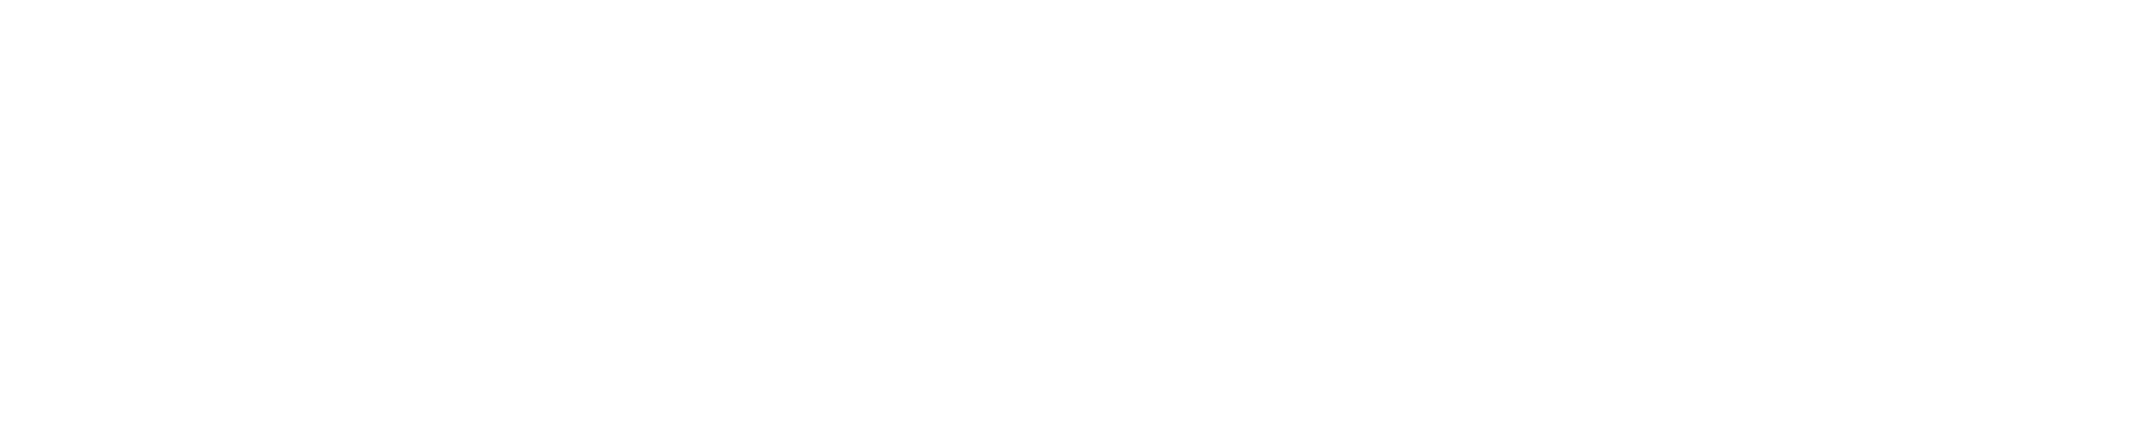 Hanlon Financial Systems Center